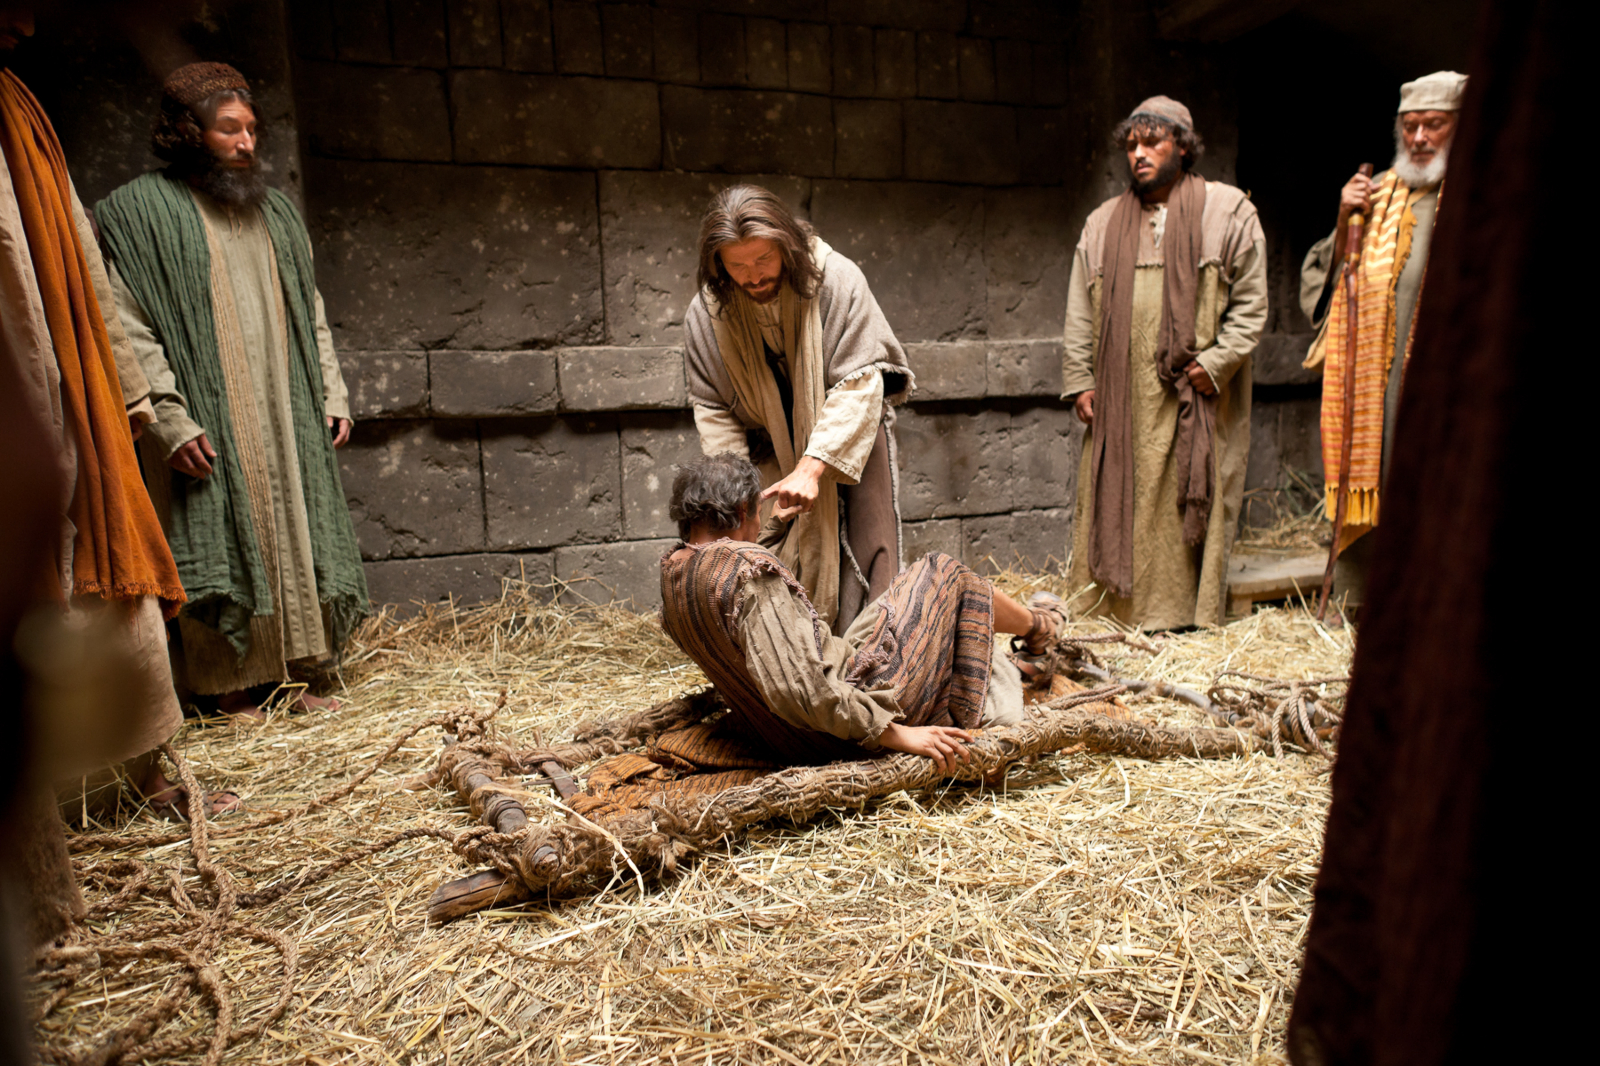 Christ raising a paralyzed man, miracle, new testament